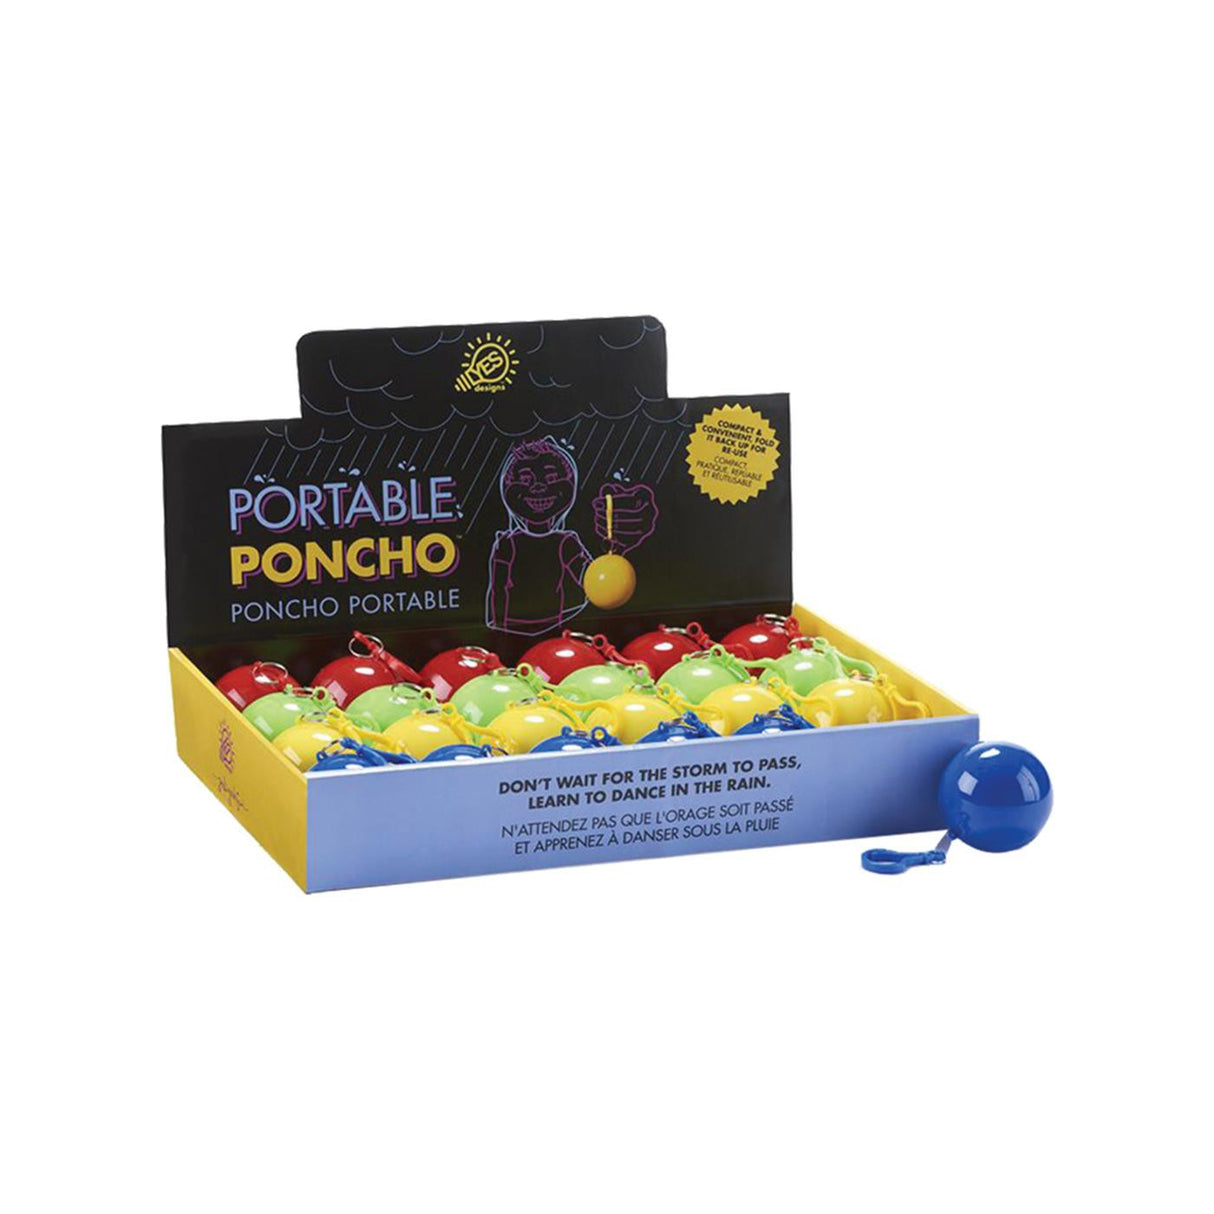 Disposable Rain Poncho